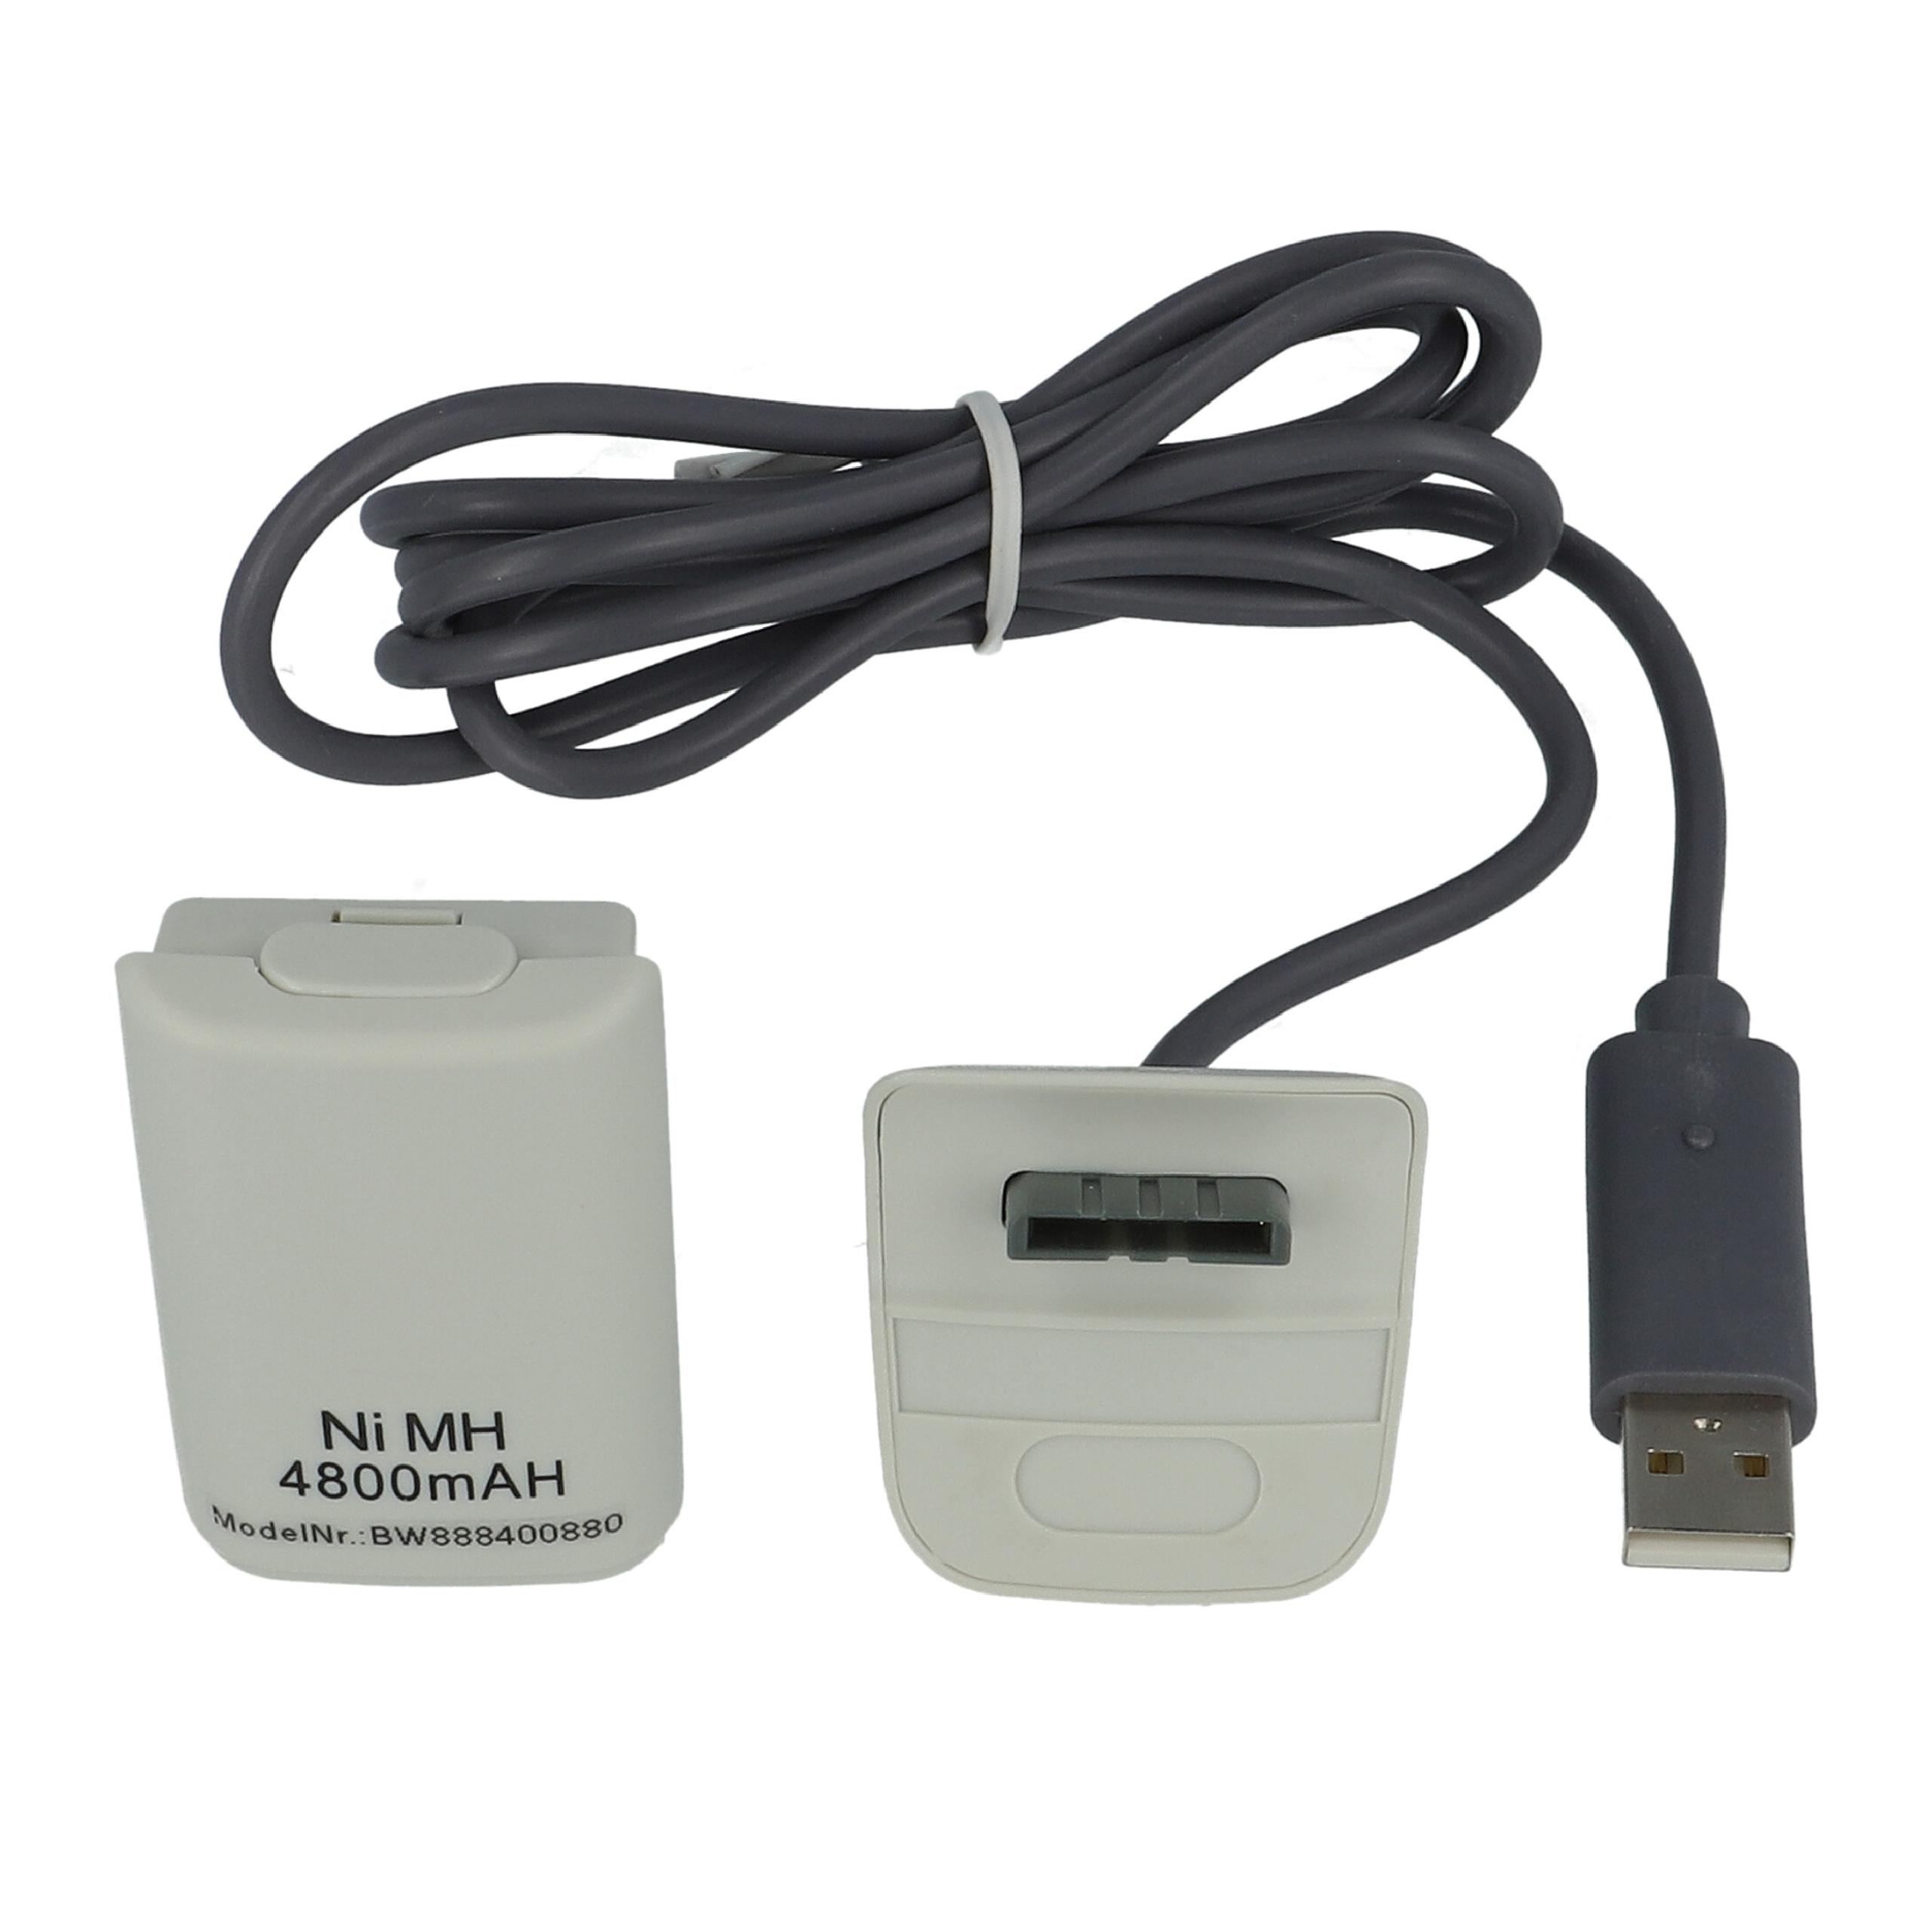 vhbw Kit carga y juega - 1x cable de carga, 1x batería blanco / gris